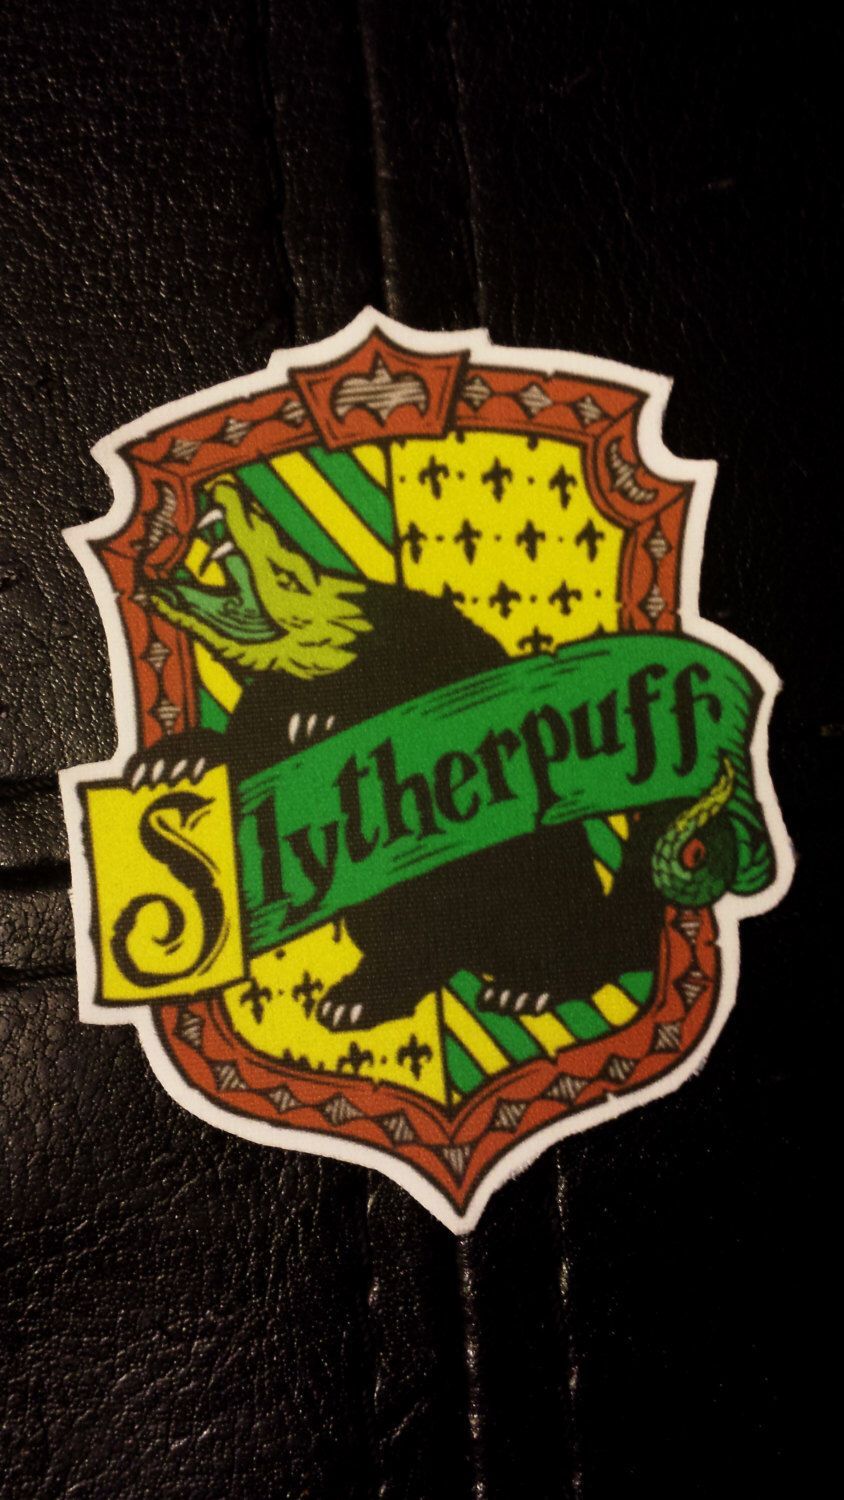 Harry Potter Slytherpuff Cross House Crest Vinyl Sticker. Potter, Harry Potter, Harry